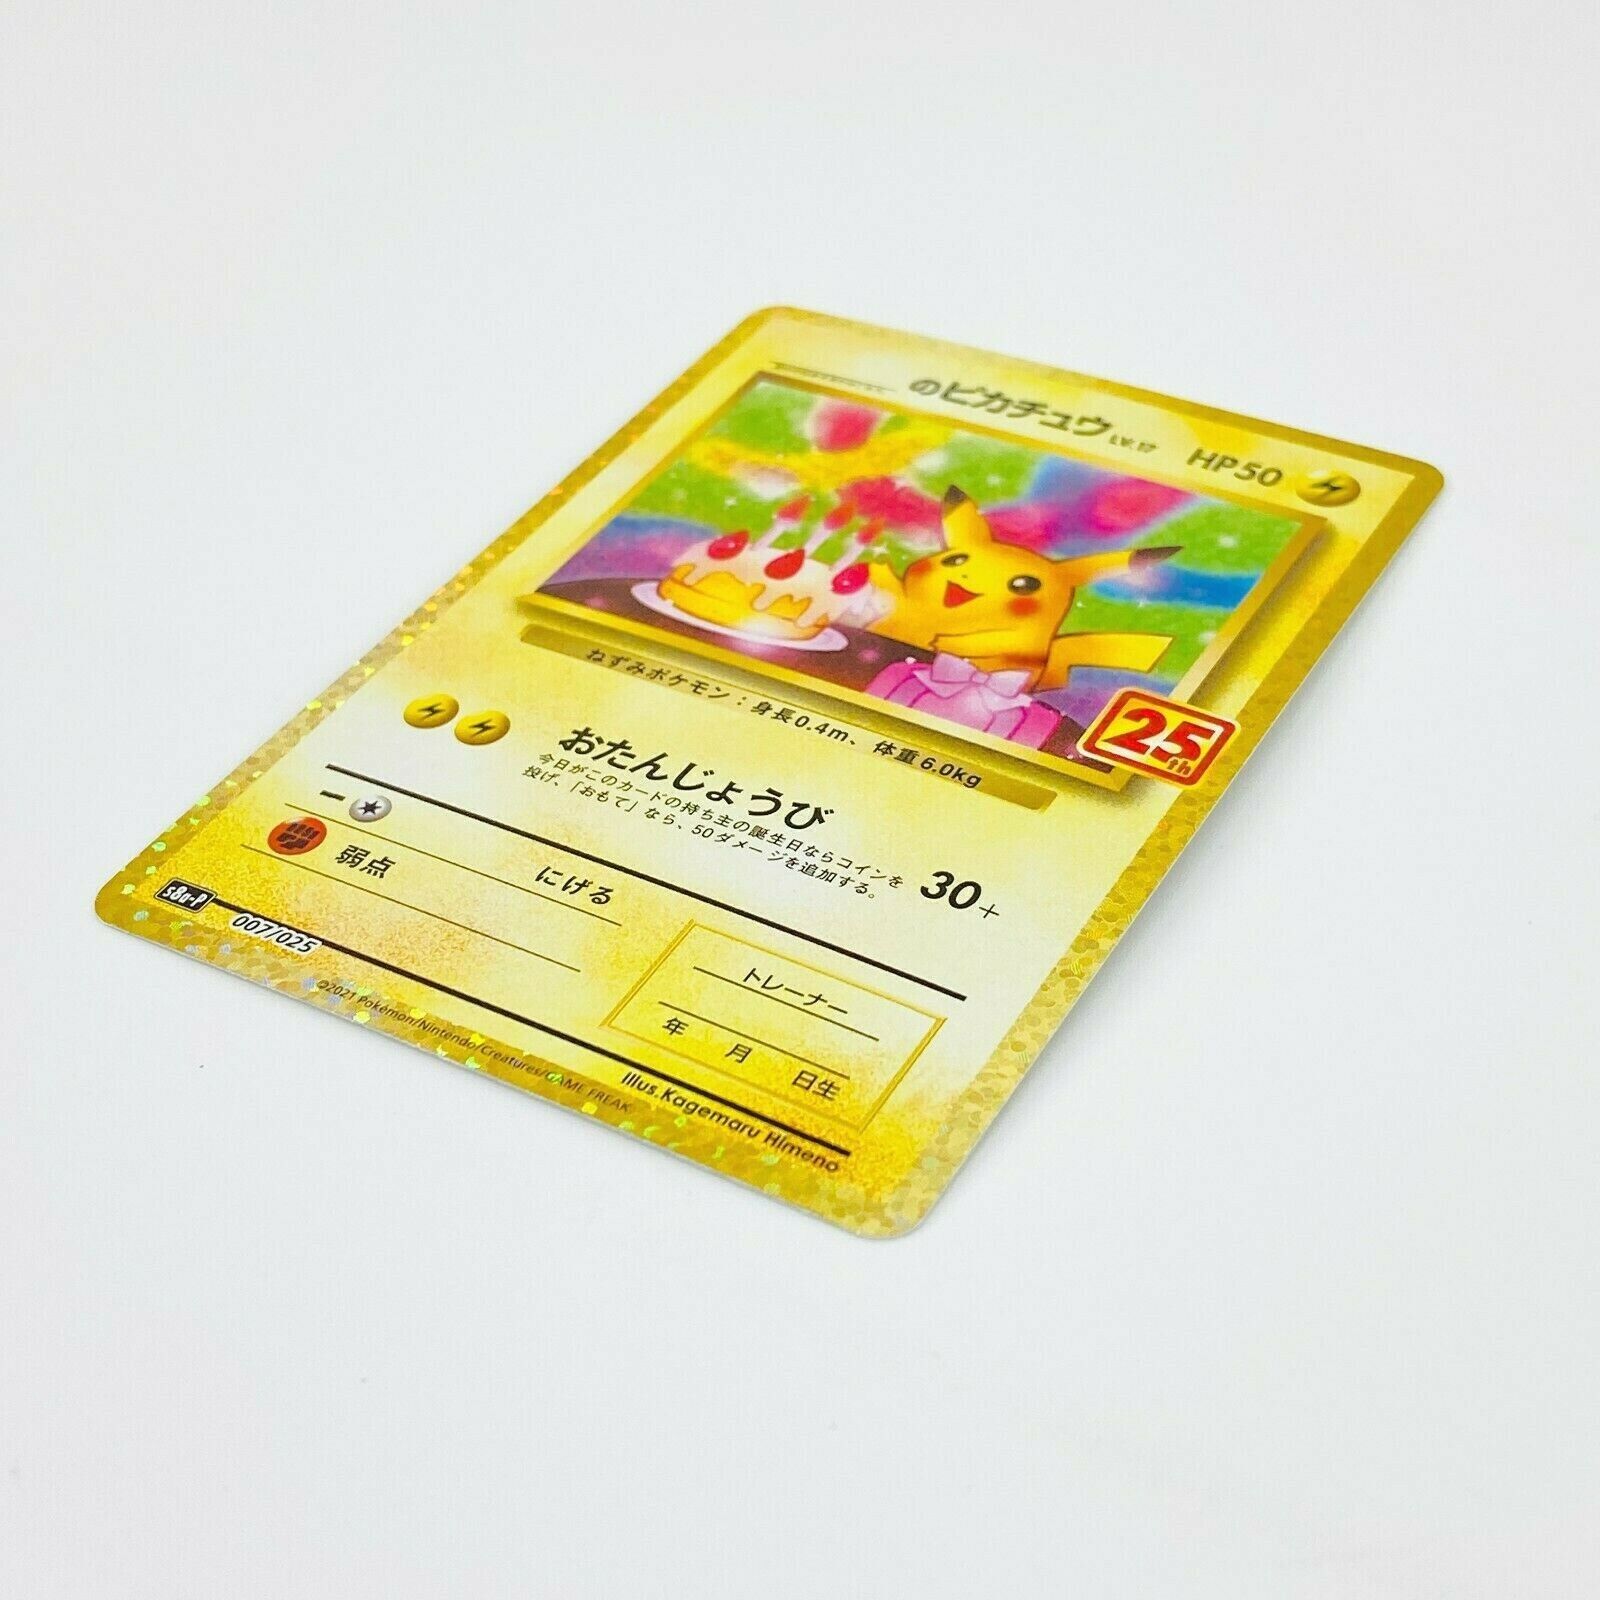 _'s Birthday Pikachu 007/025 S8a-P 25th Anniversary - Pokemon